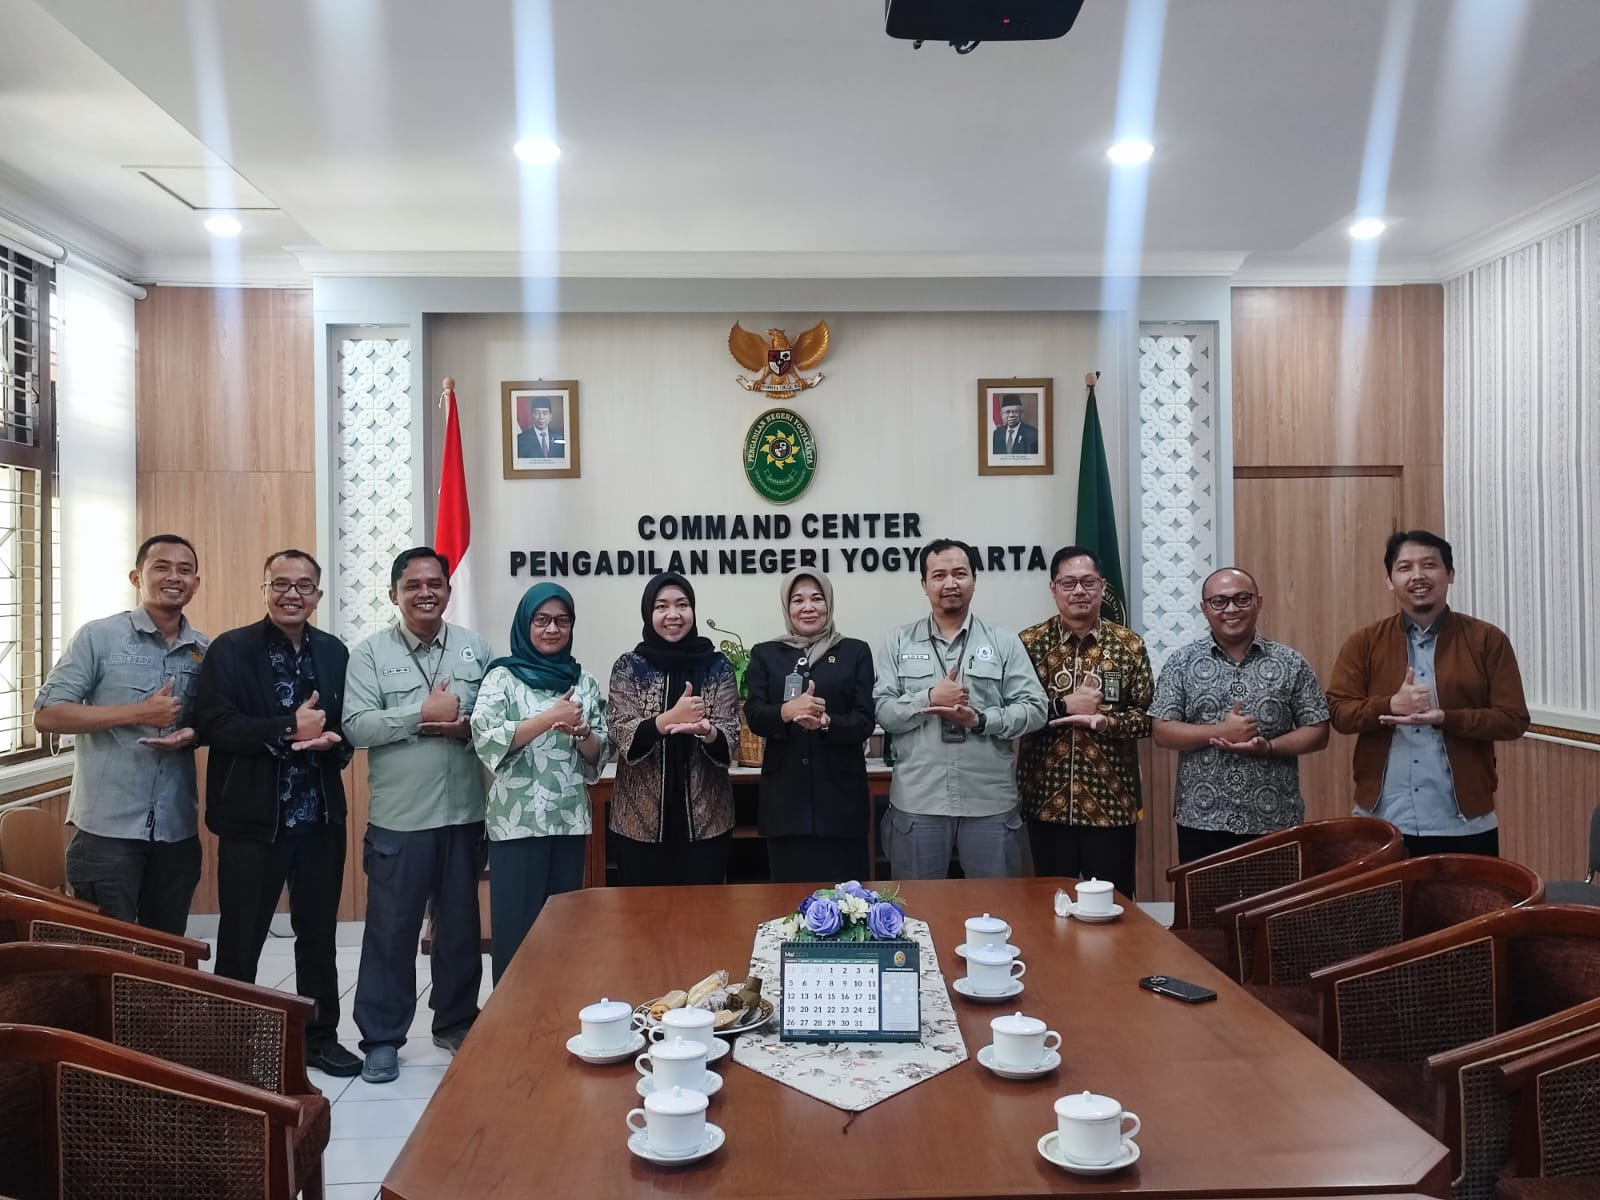 Pengadilan Negeri Yogyakarta Mendapatkan Kunjungan Kerja dari BPJS Kesehatan